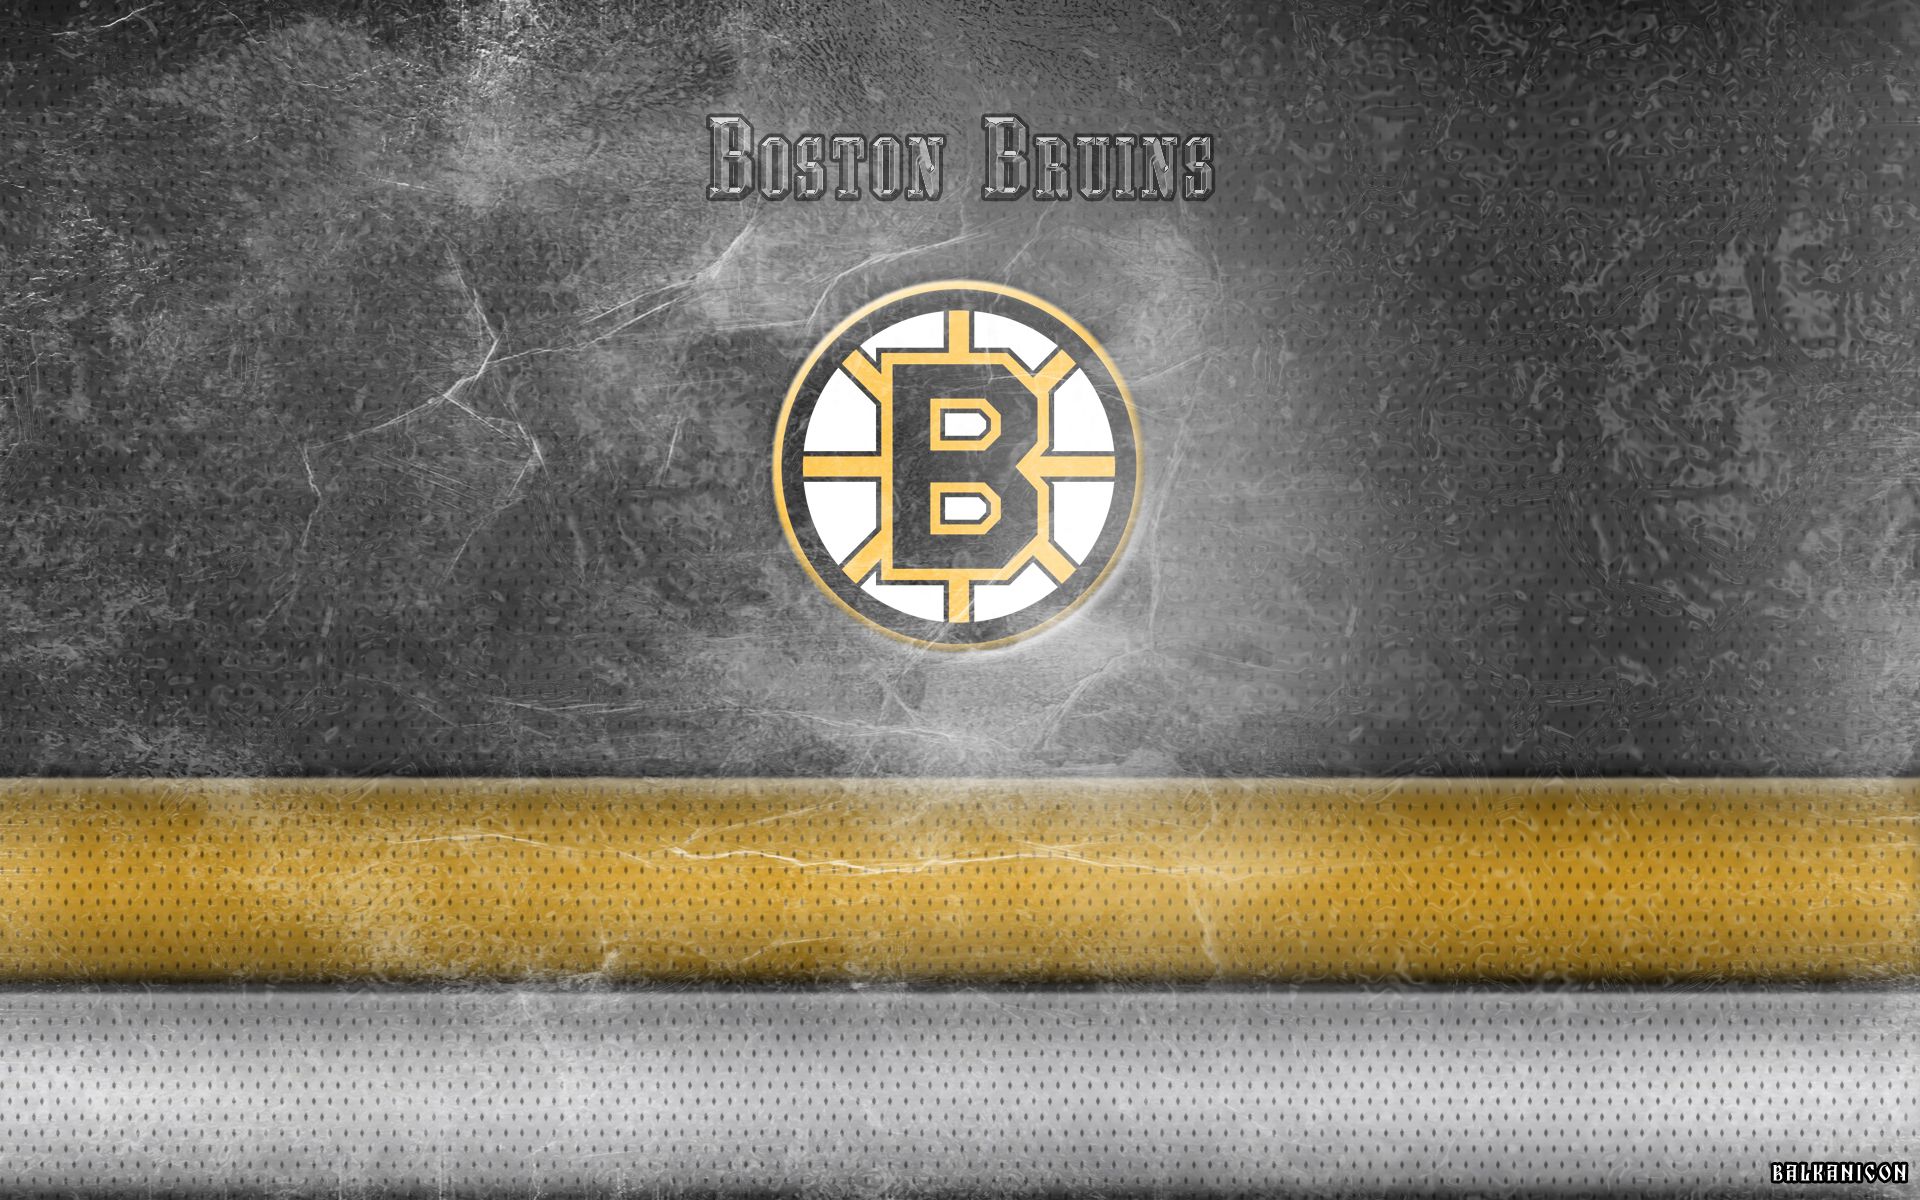 Boston Bruins wallpaper by Balkanicon on DeviantArt